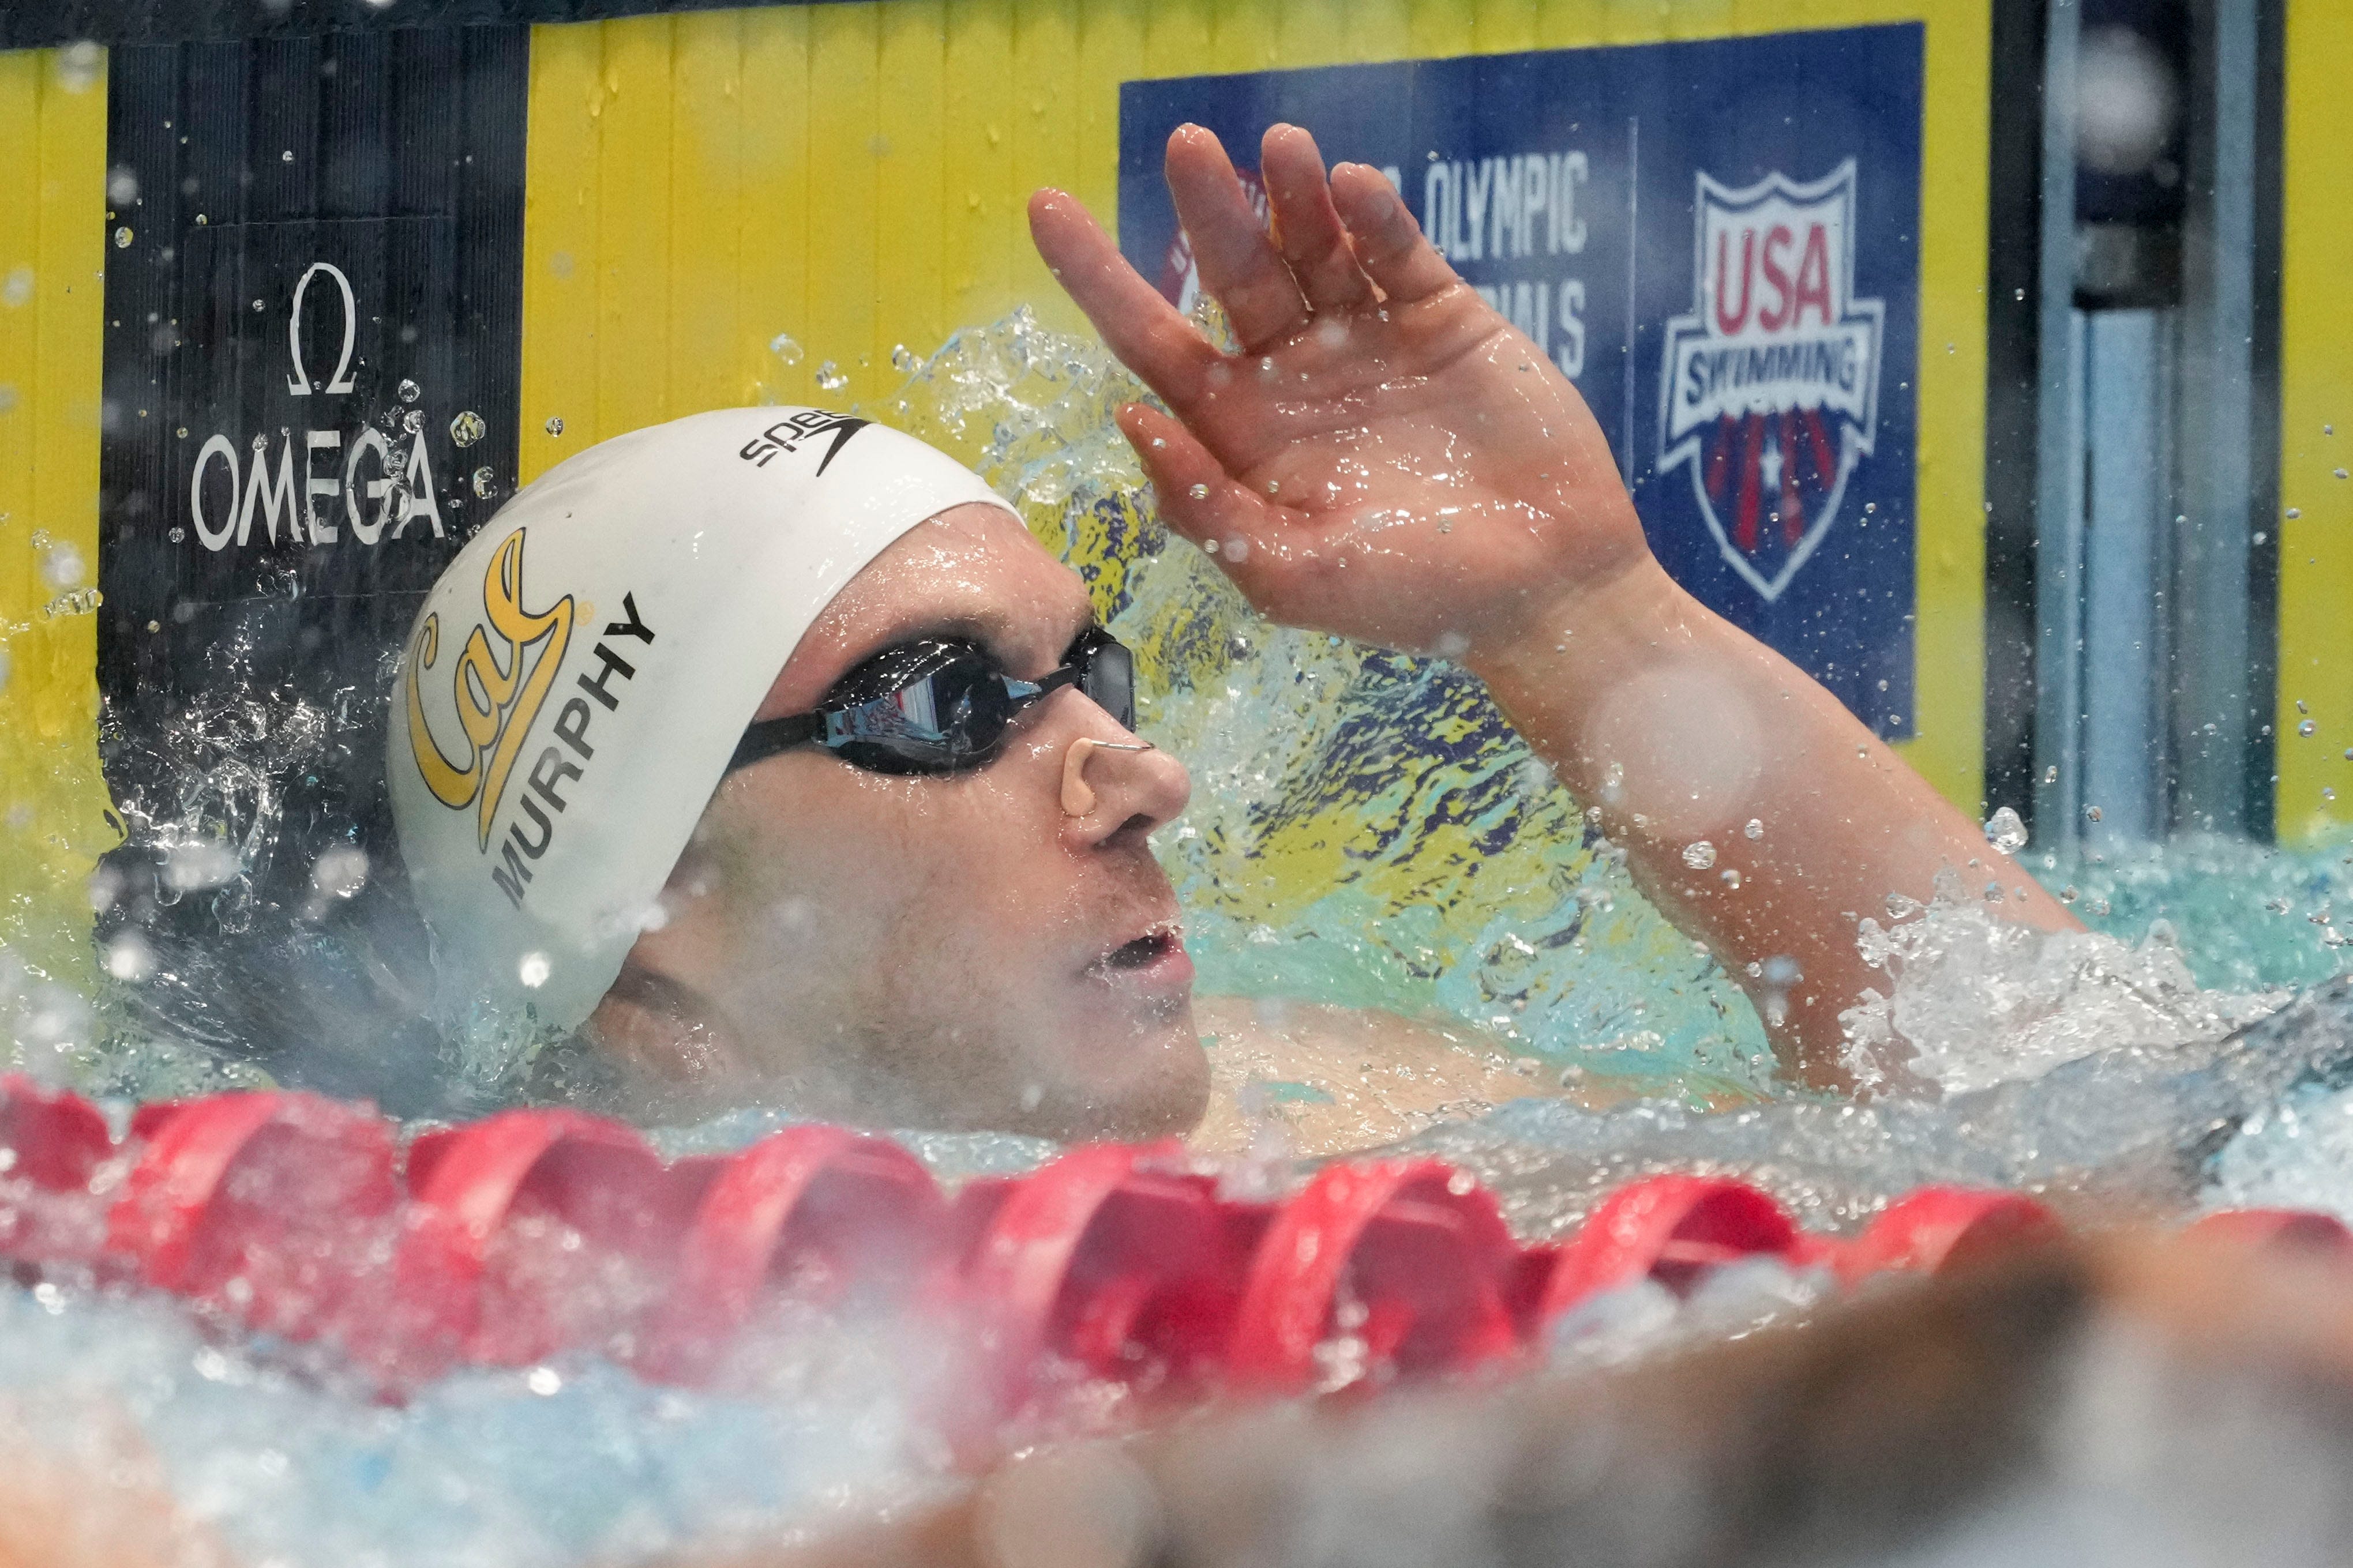 Paris-bound! Ryan Murphy makes history again at U.S. Olympic Trials swimming